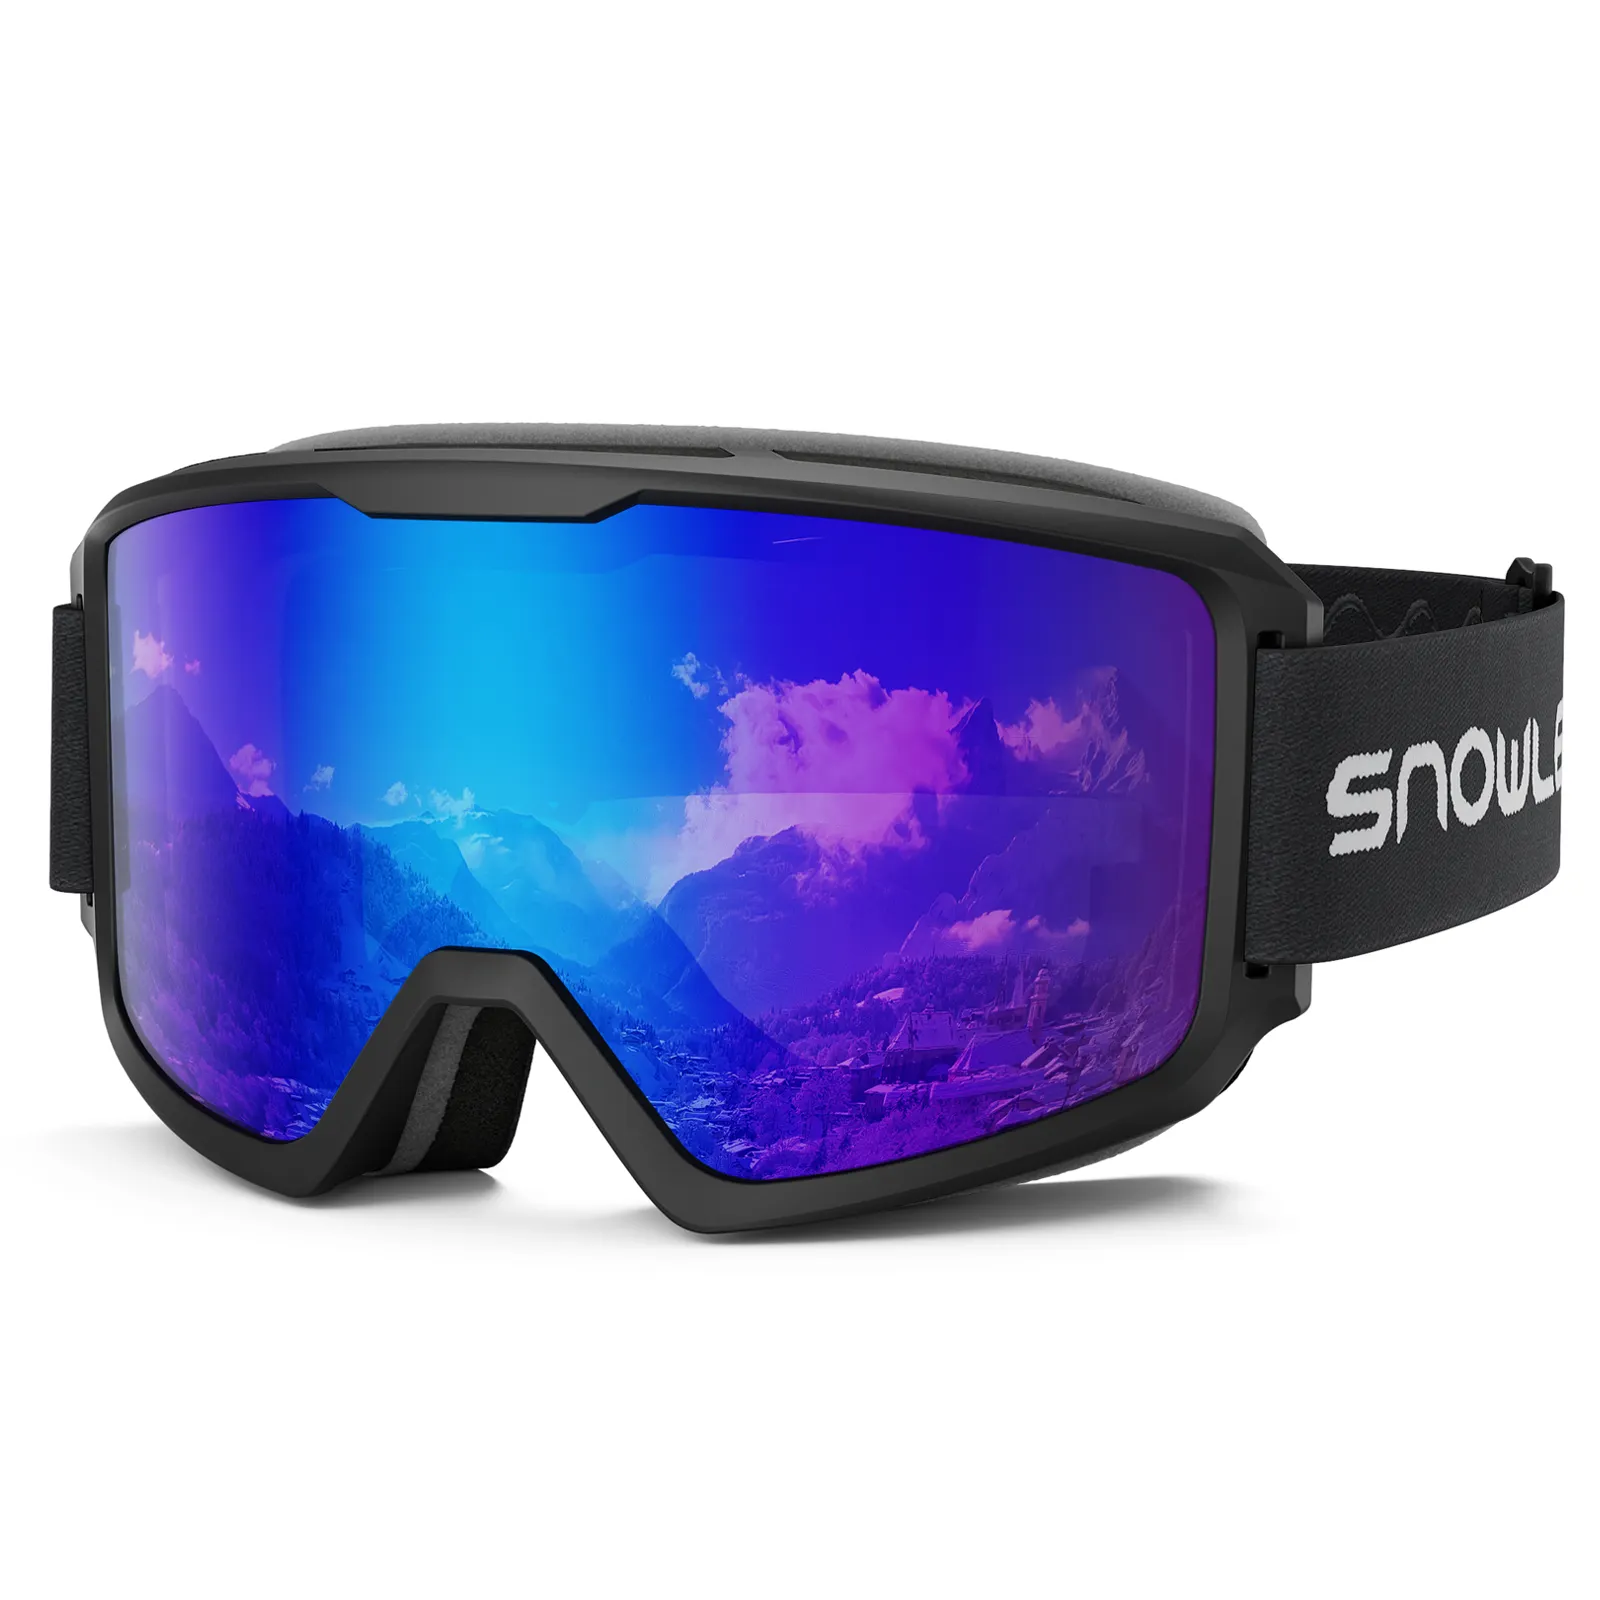 OEM עיצוב משקפי סקי OTG נגד ערפל משקפי שלג סט משקפי סנובורד בסיטונאות